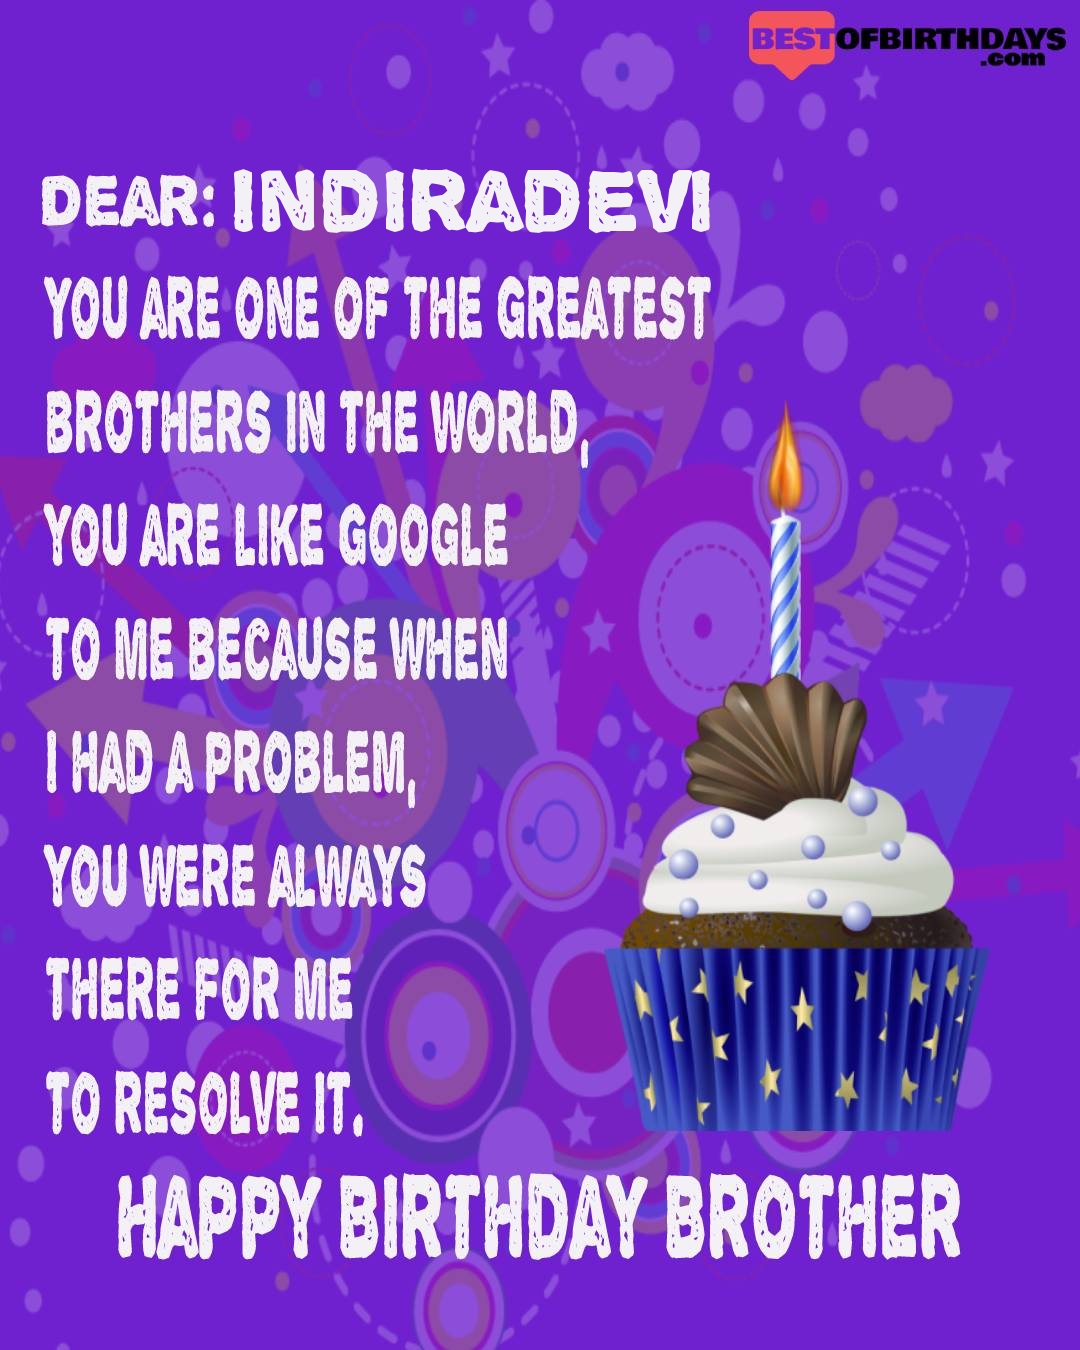 Happy birthday indiradevi bhai brother bro